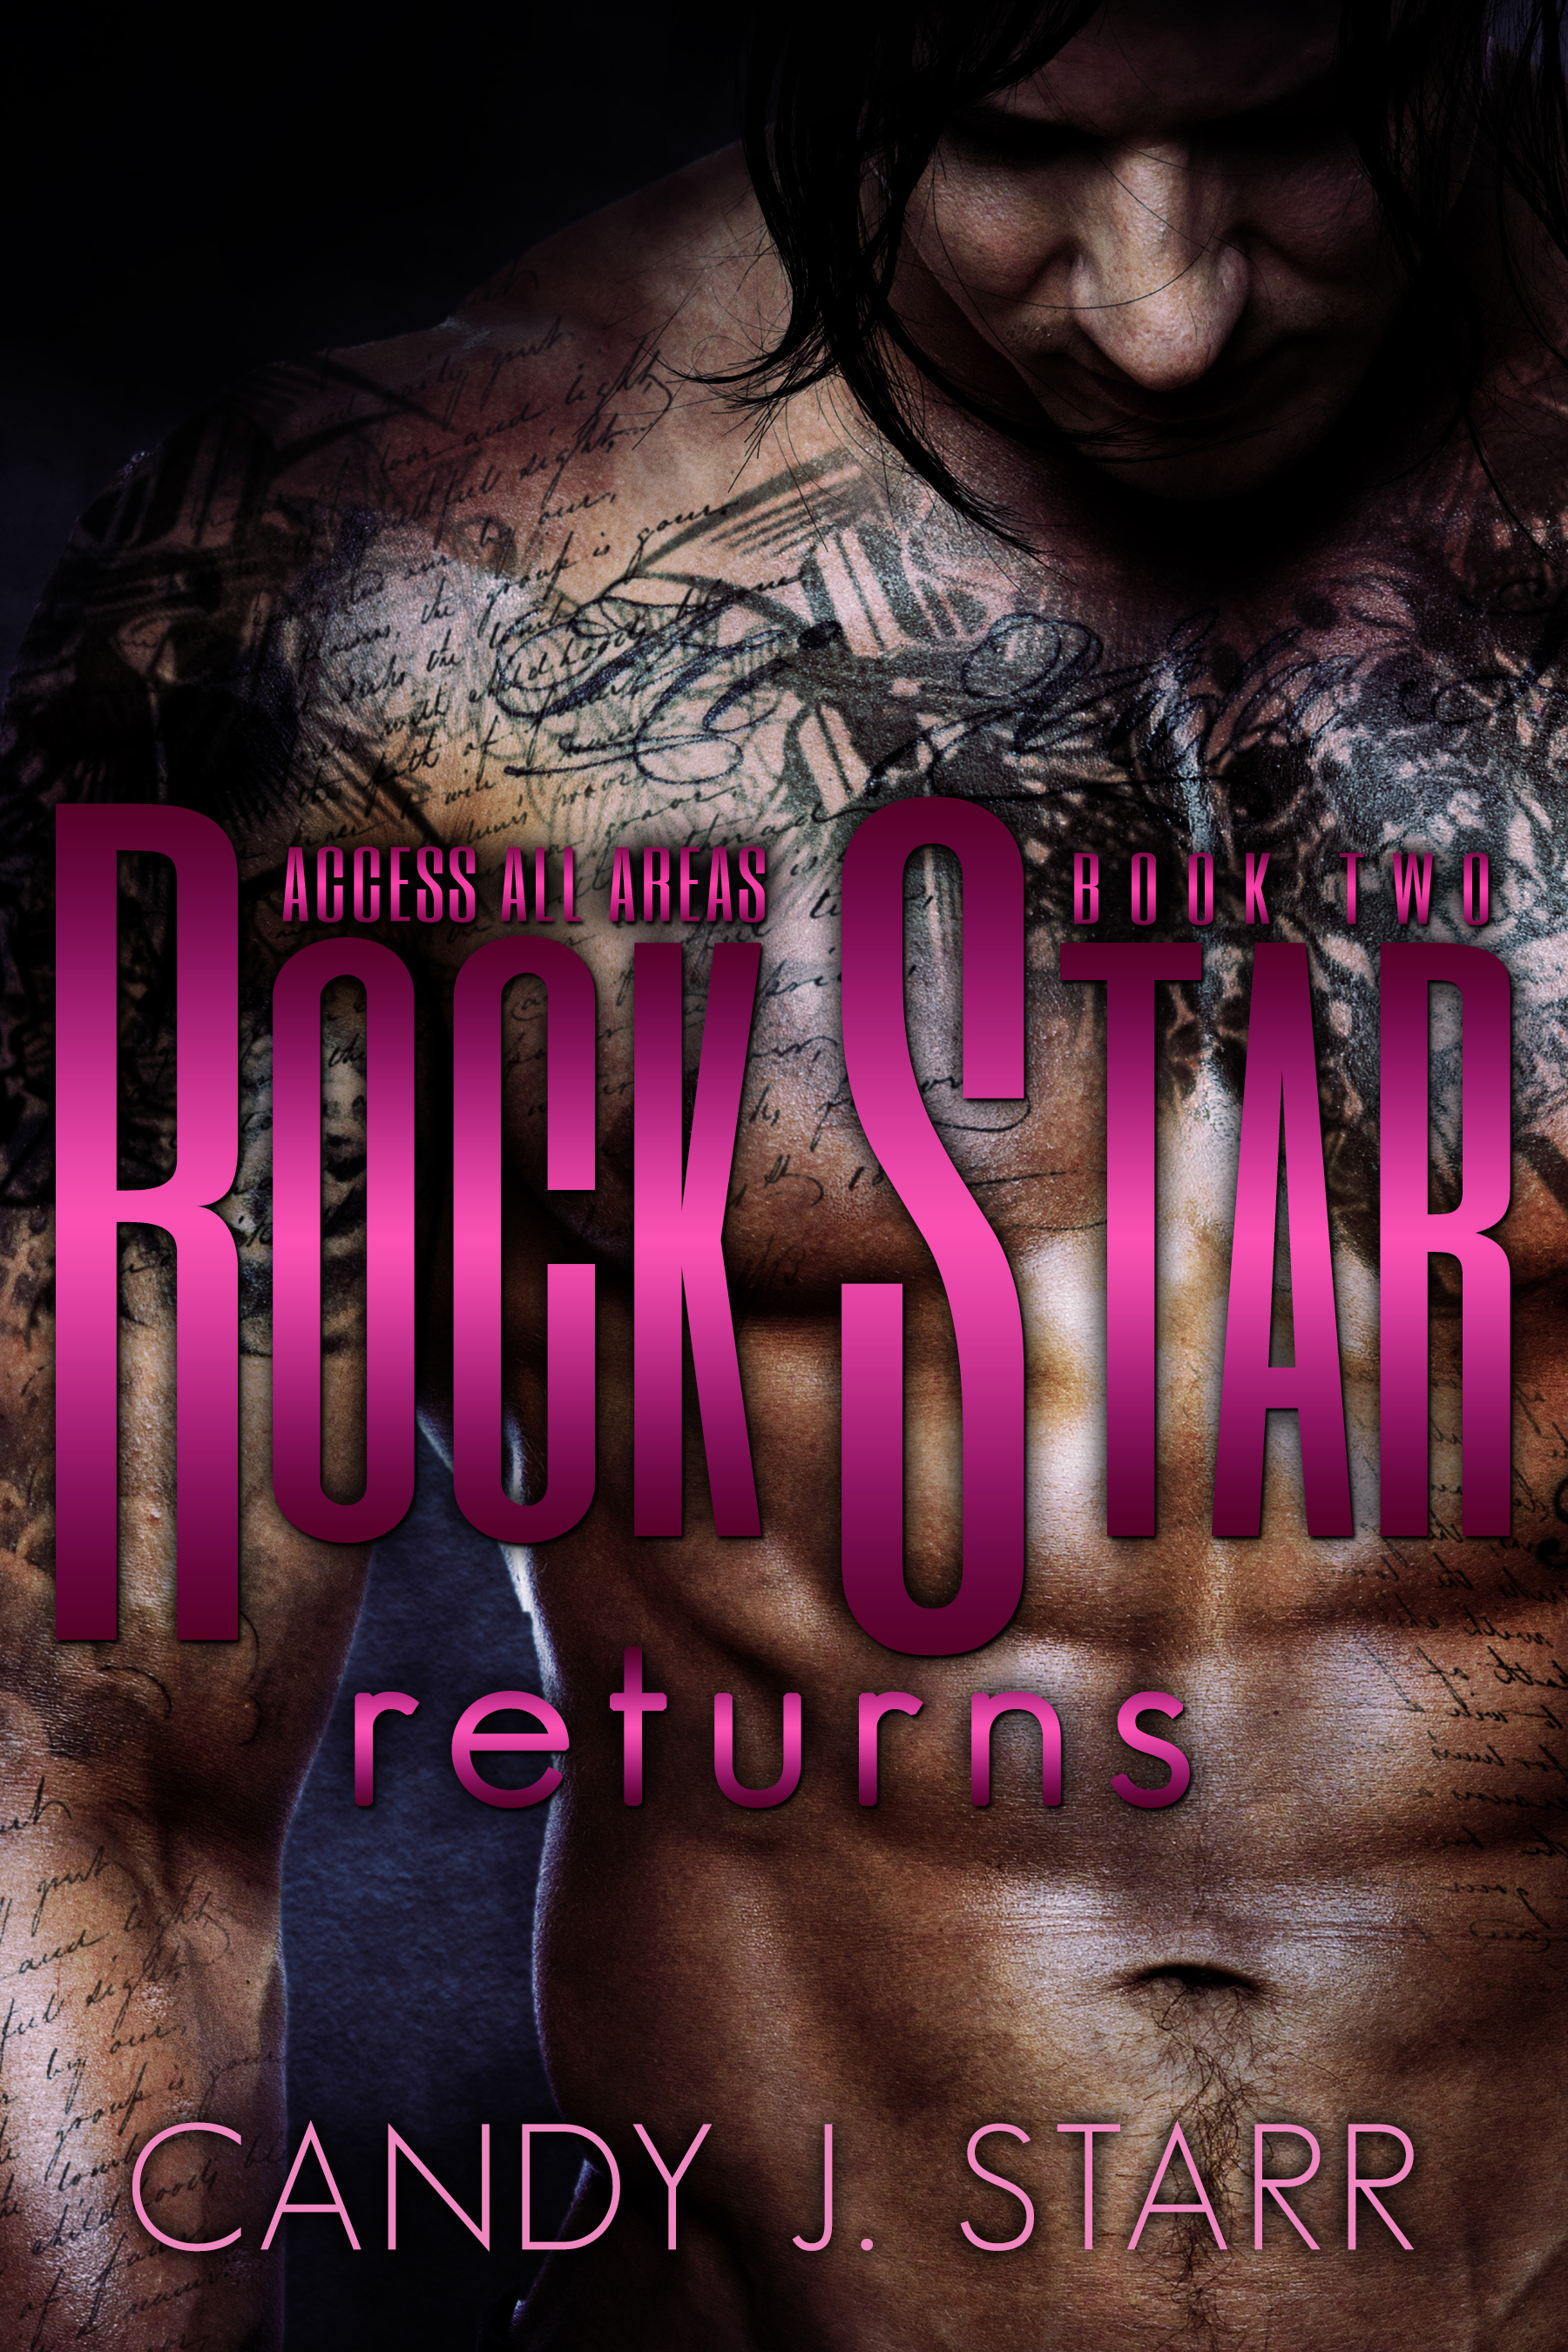 (HANDOVER) eBook cover, Rock Star Returns